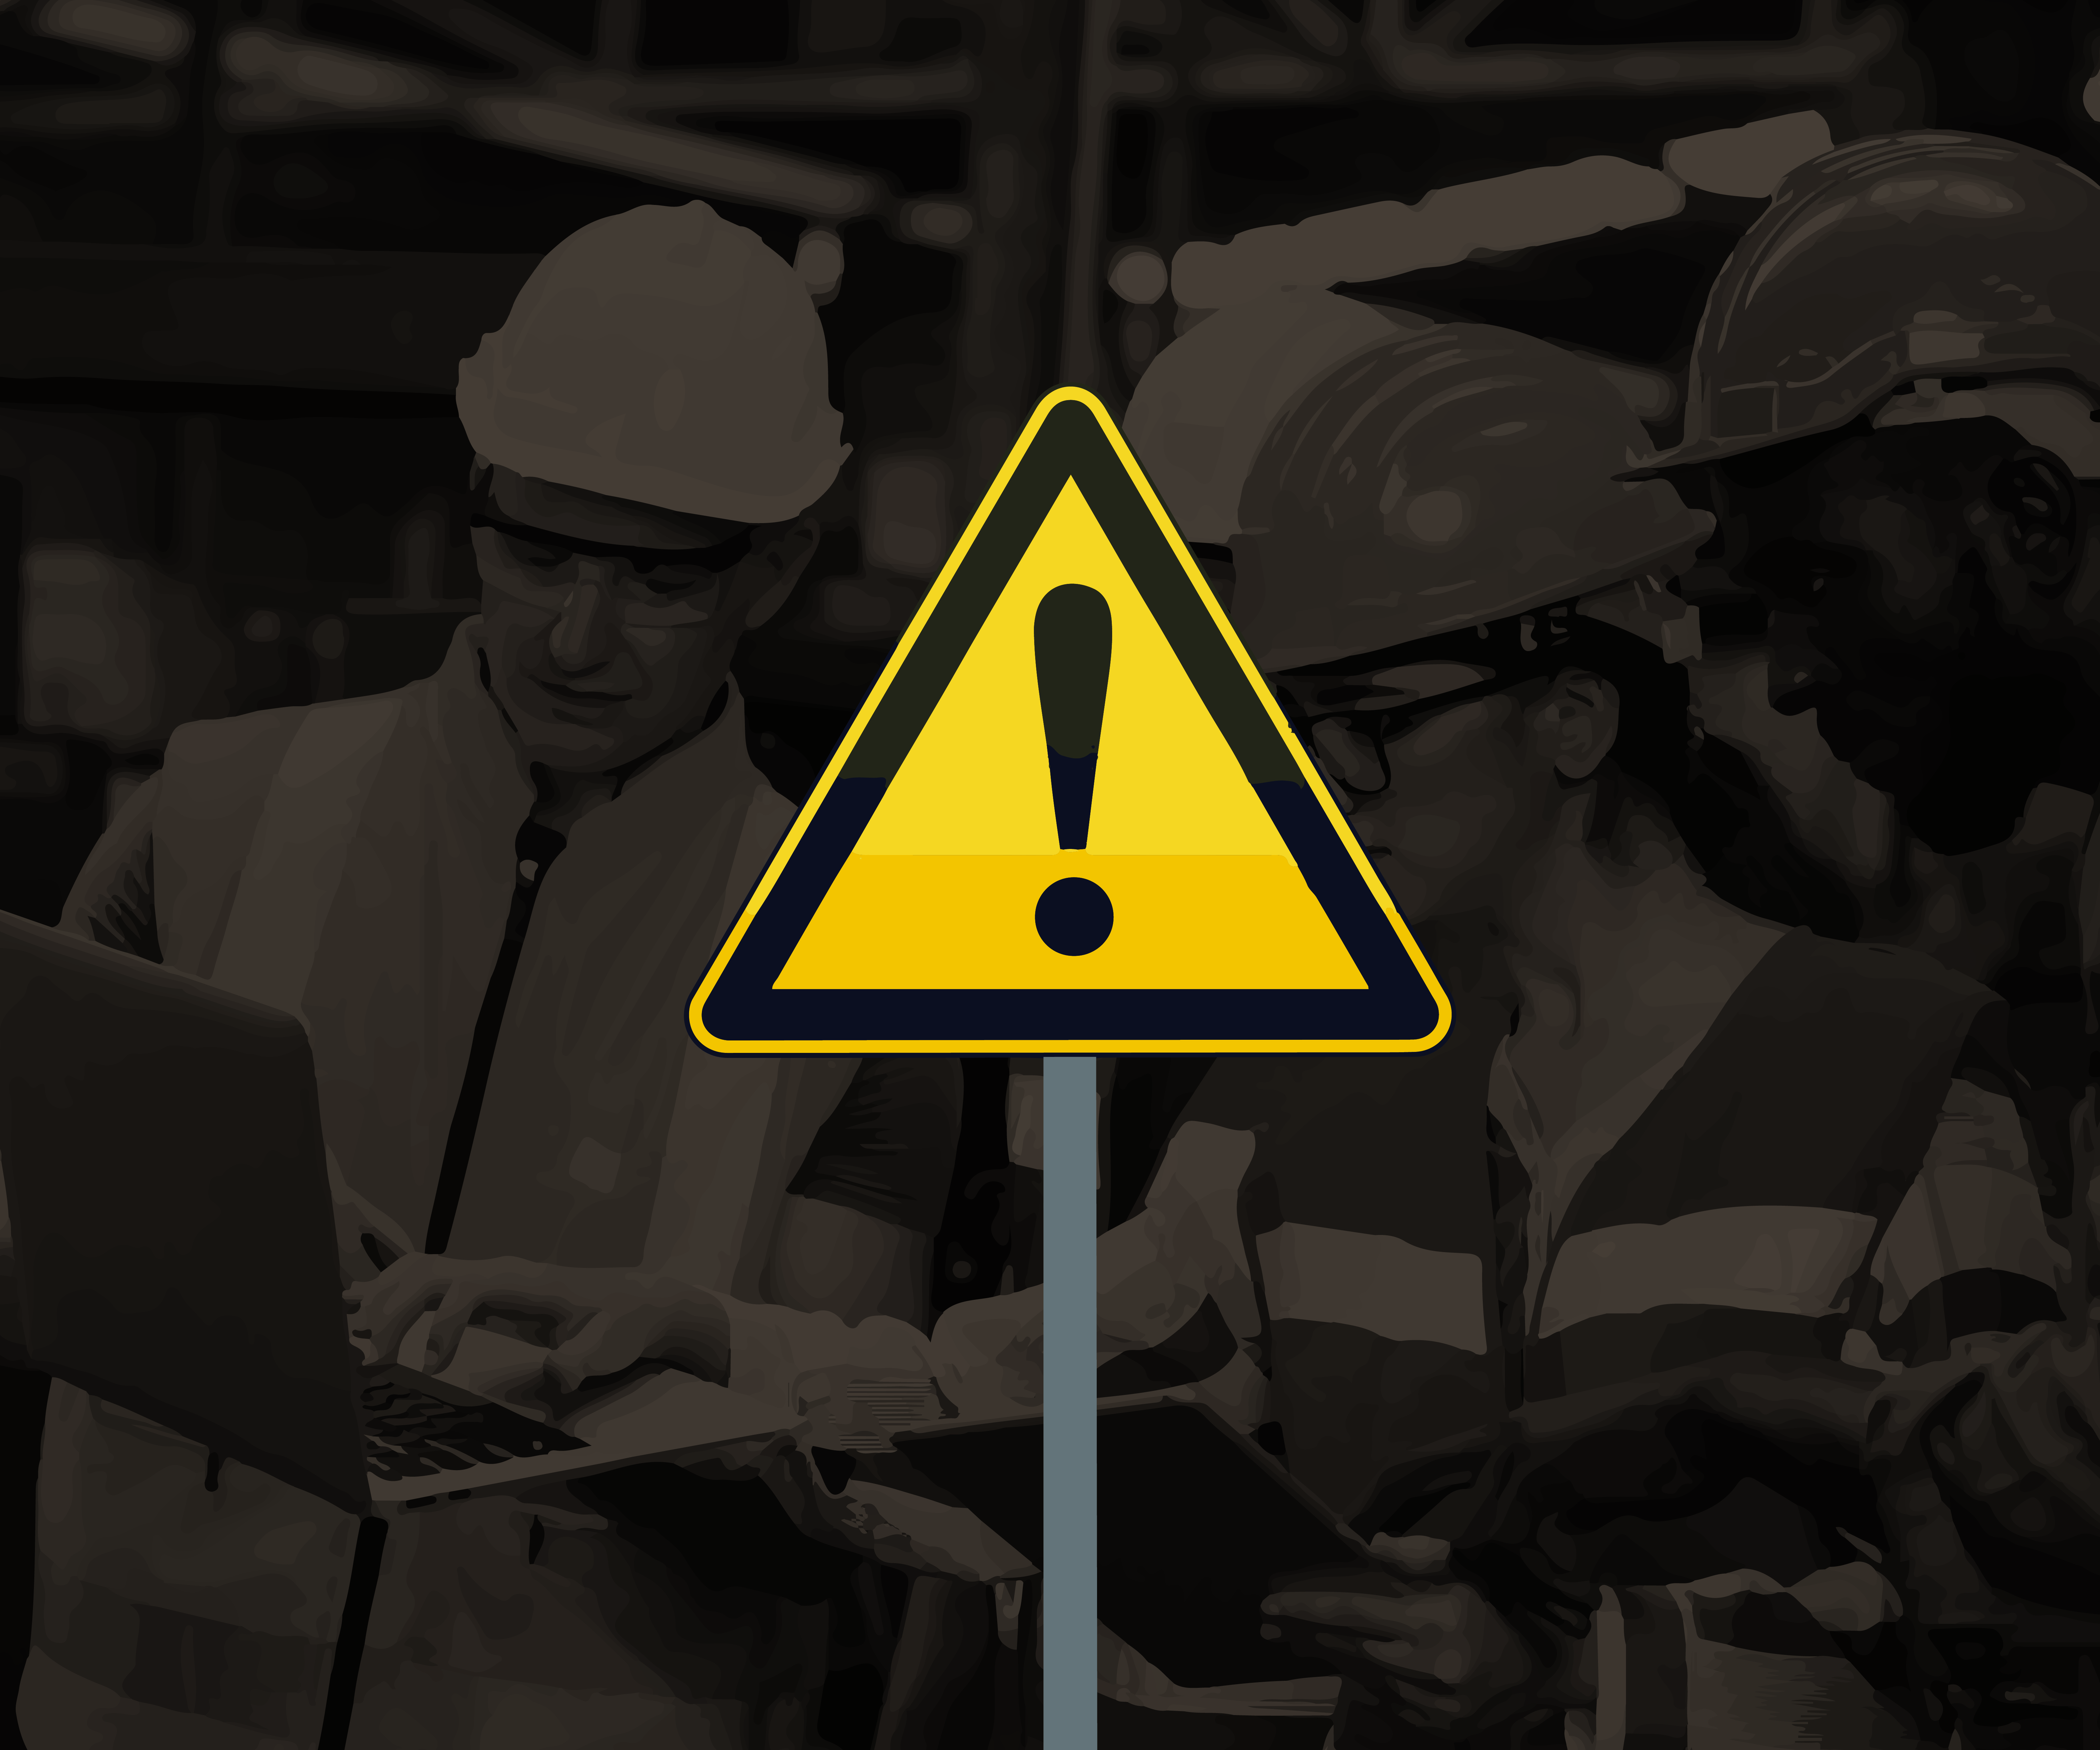 Workplace safety alerts